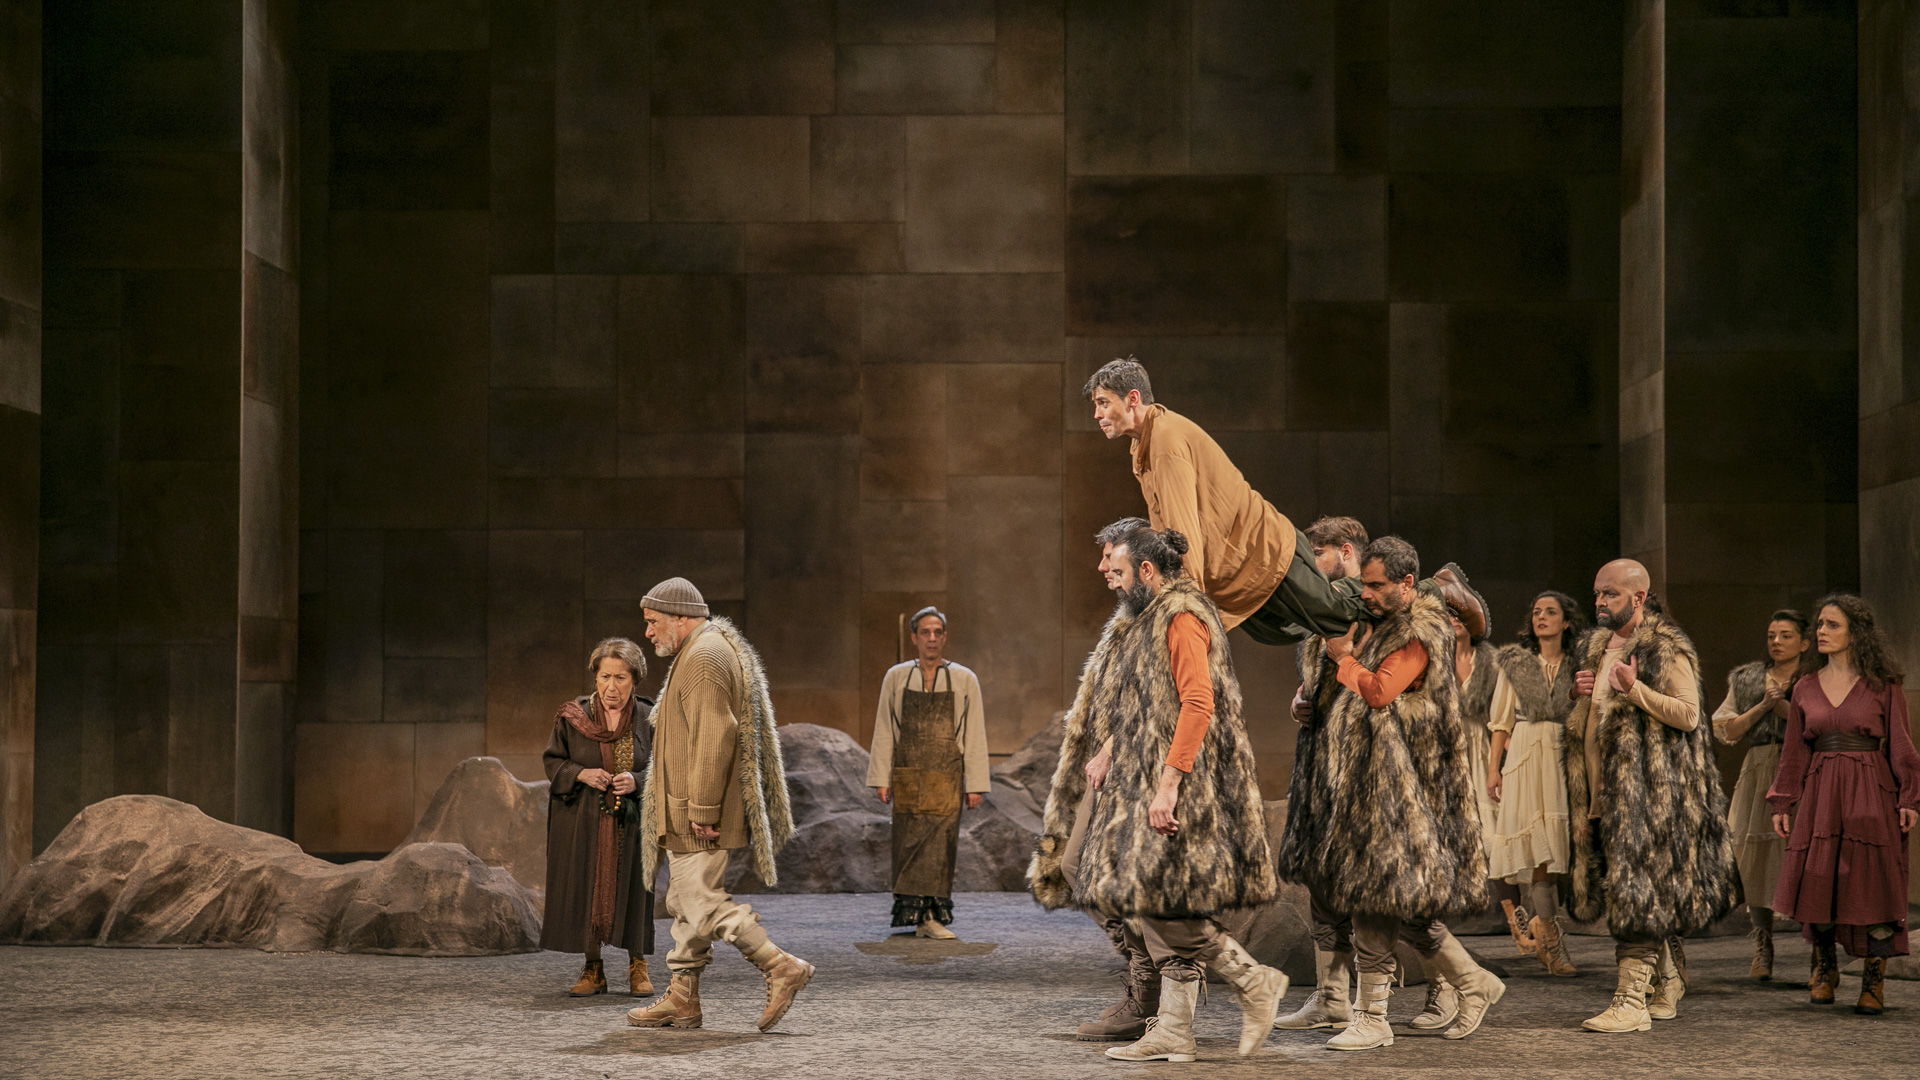 You are currently viewing Κωνσταντίνος Μπούρας: Το θέατρο τού λόγου στην βέλτιστη εικονοποίησή του – Η «Αιολική Γη» του Ηλία Βενέζη στο Εθνικό μας Θέατρο   